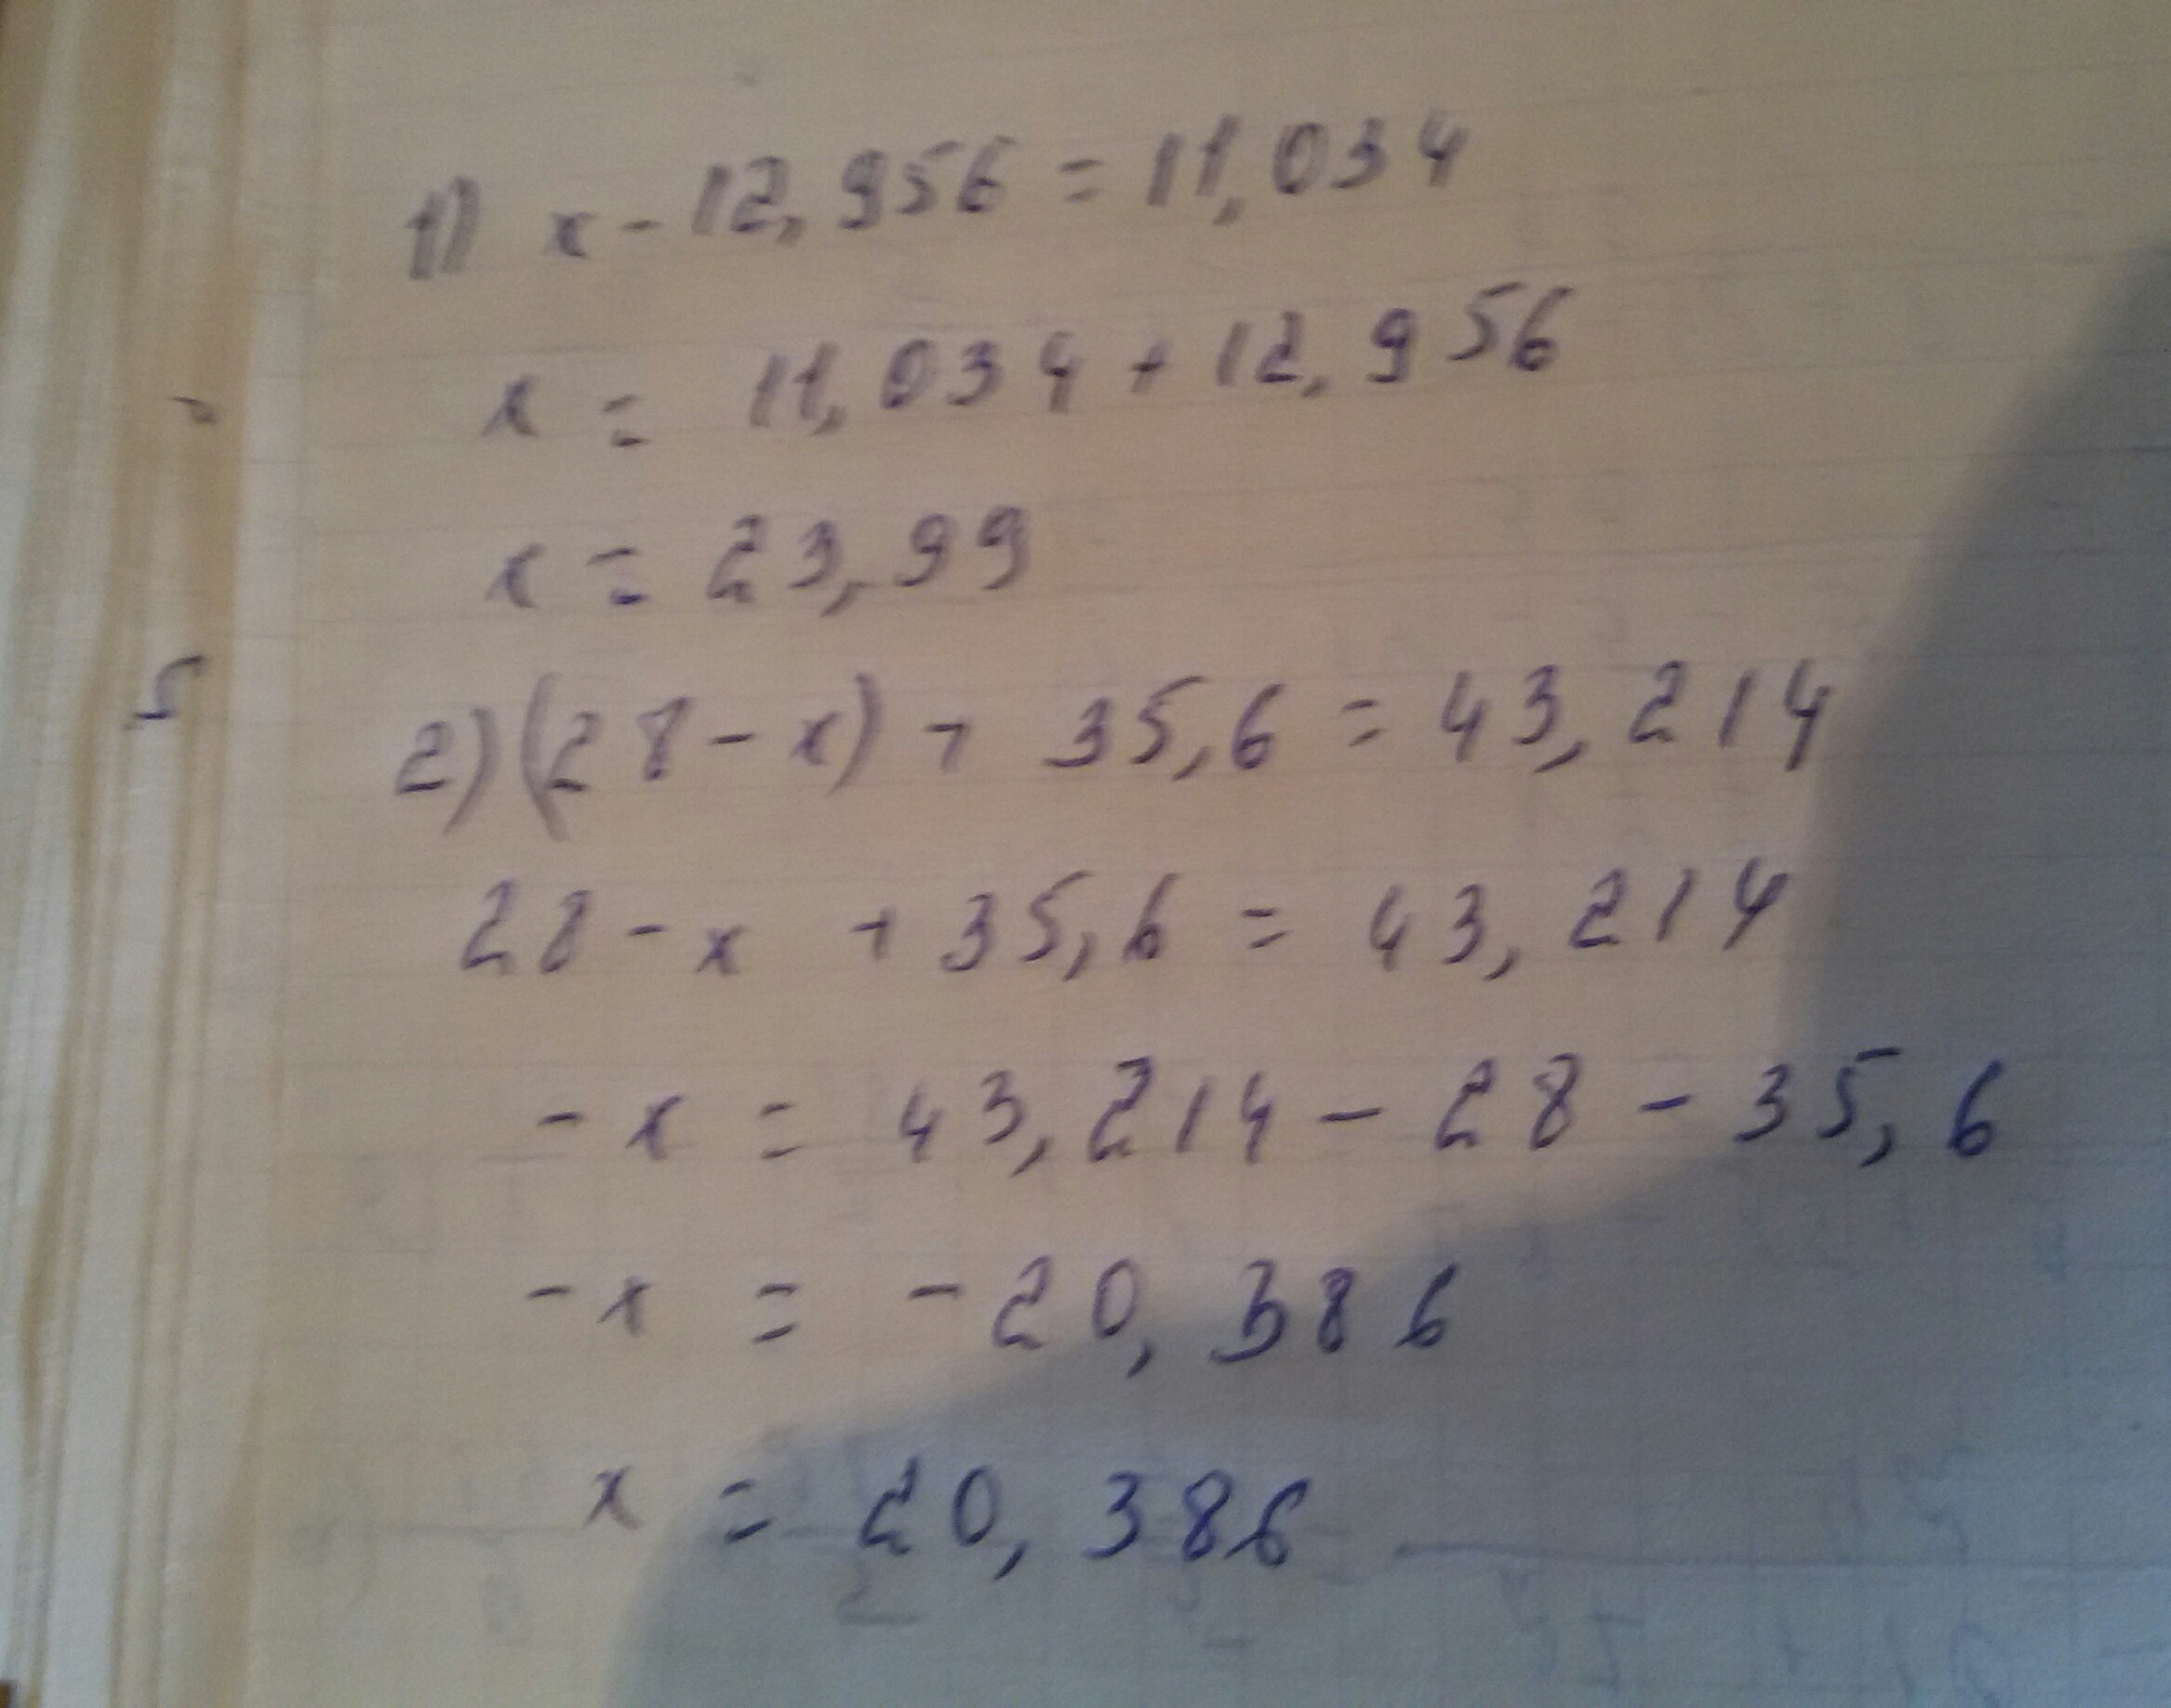 3 икс равно 28 икс. (28-Х)+35,6=43,214. Решение уравнения (28-х)+35,6=43,214. Решение уравнения 28+х=28. (28-Х)+35,6=43,214 ответ.